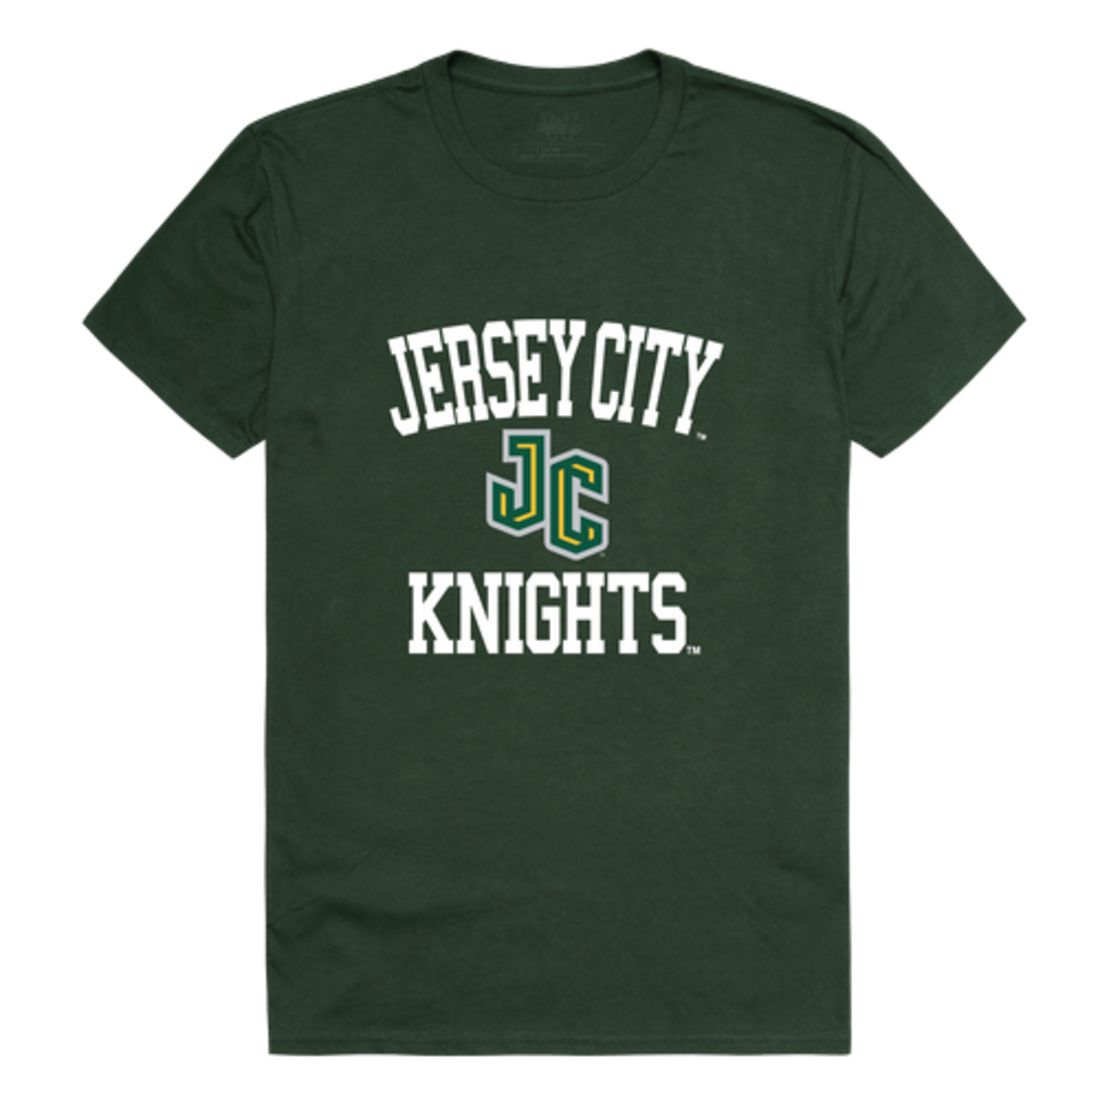 New Jersey City University Knights Arch T-Shirt Tee